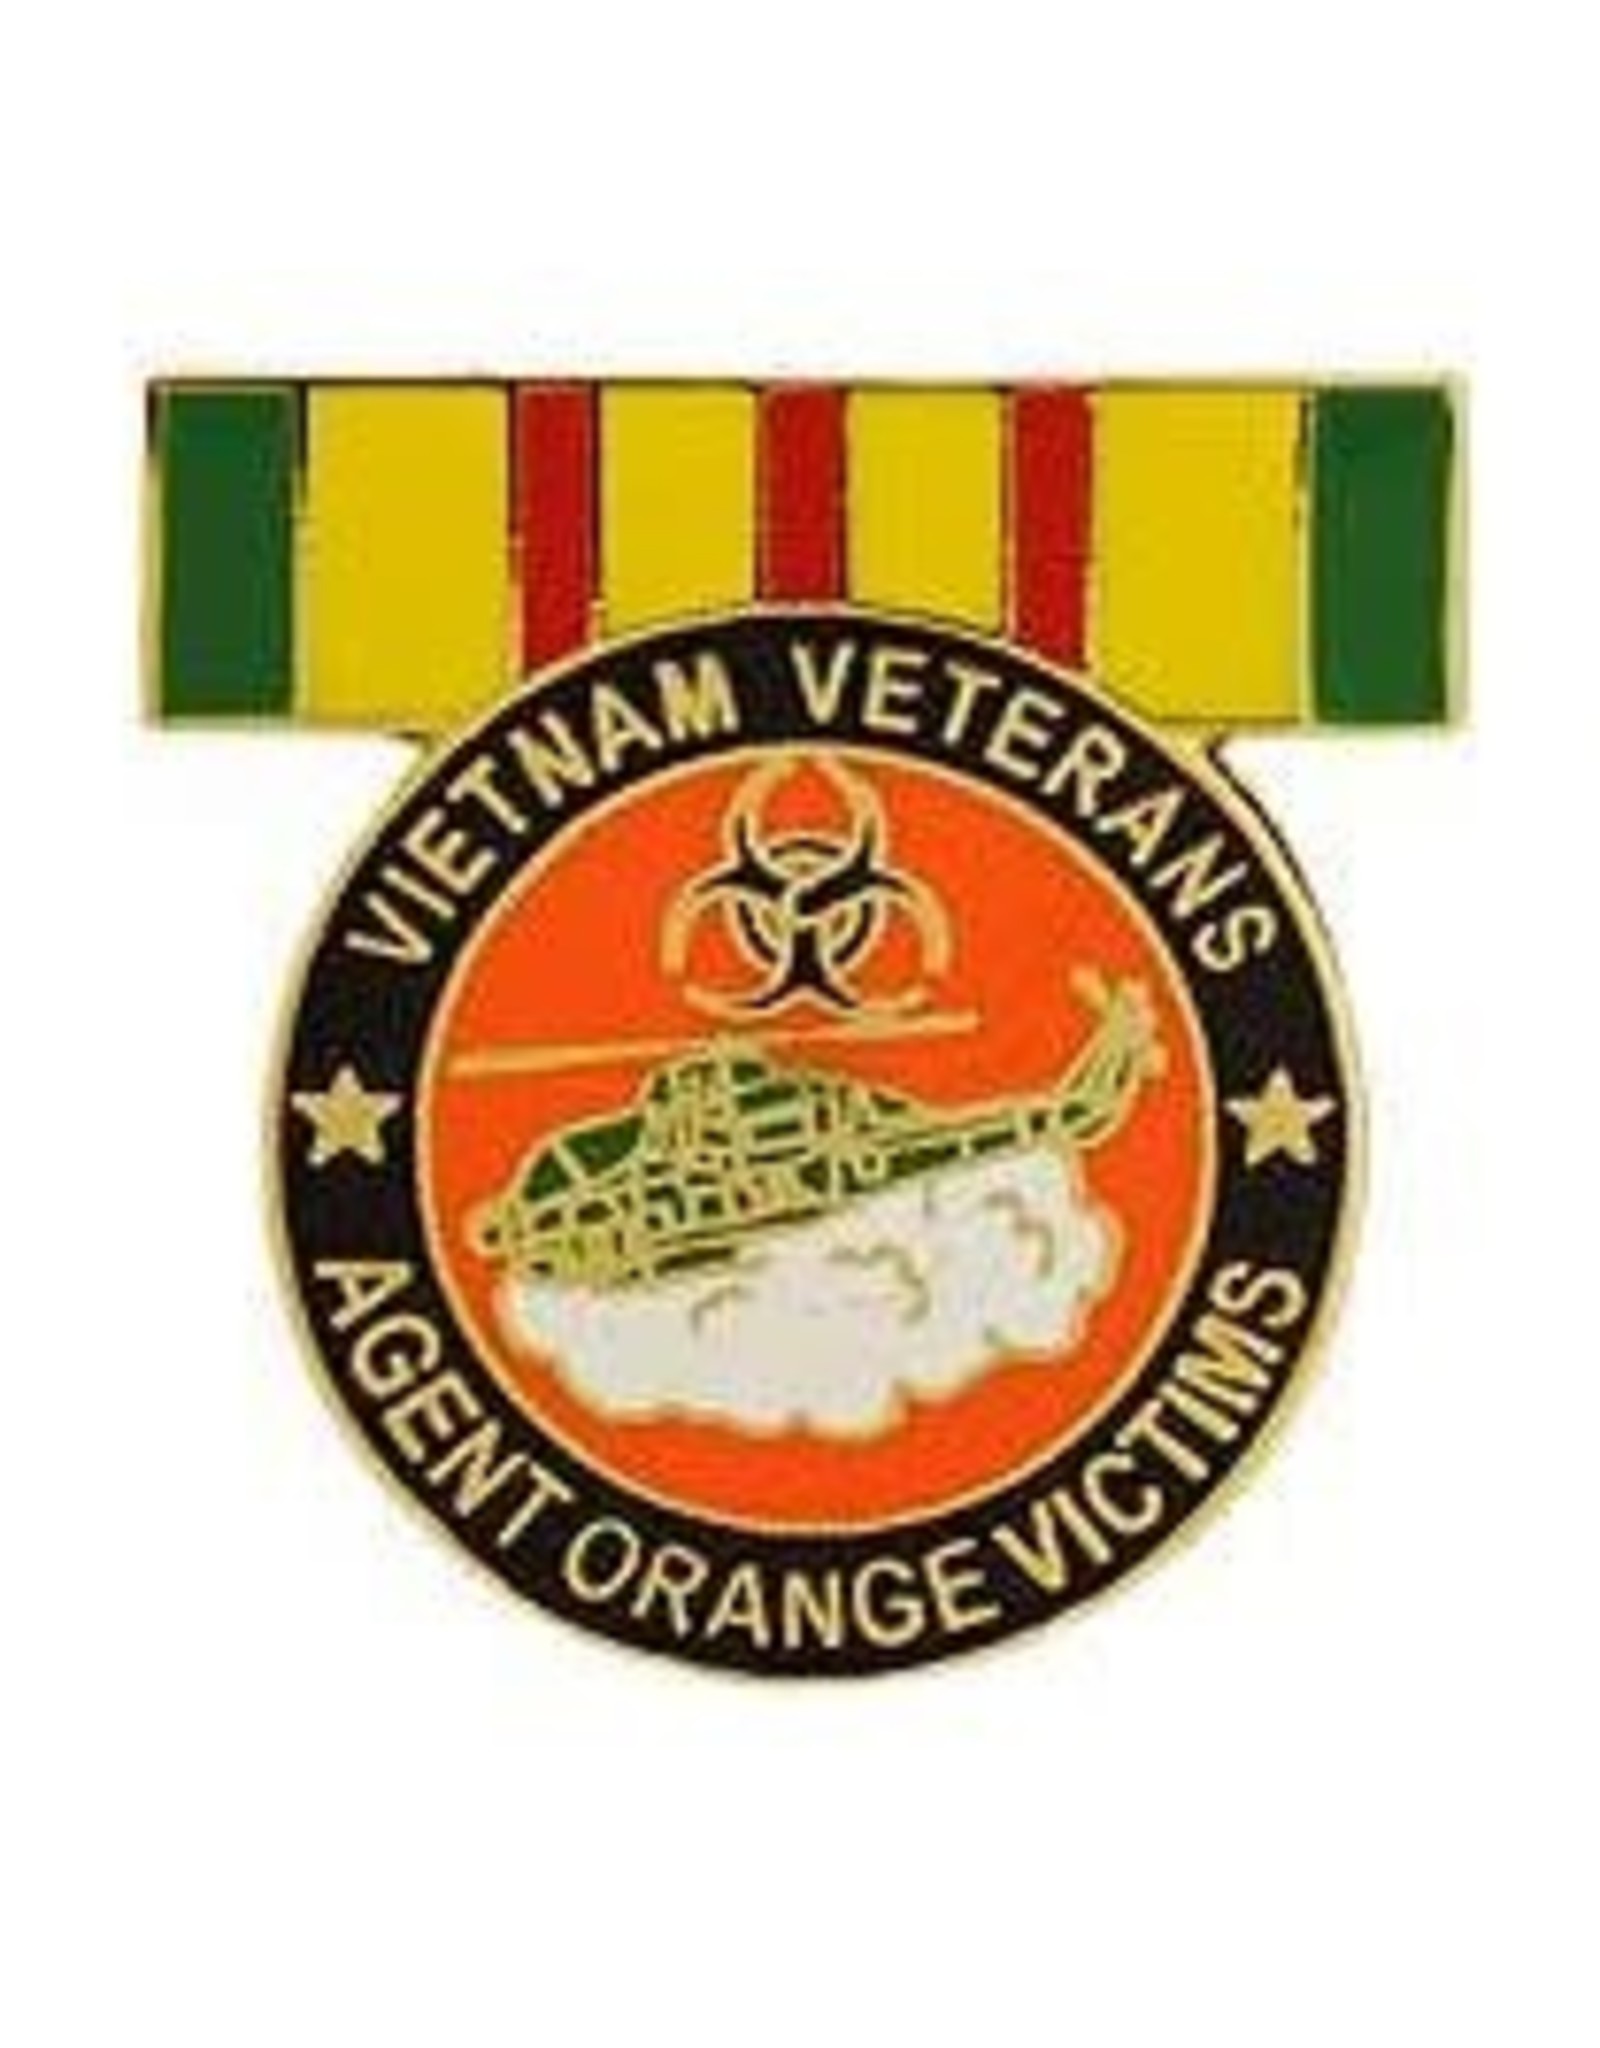 Pin - Vietnam Agent Orange Victims